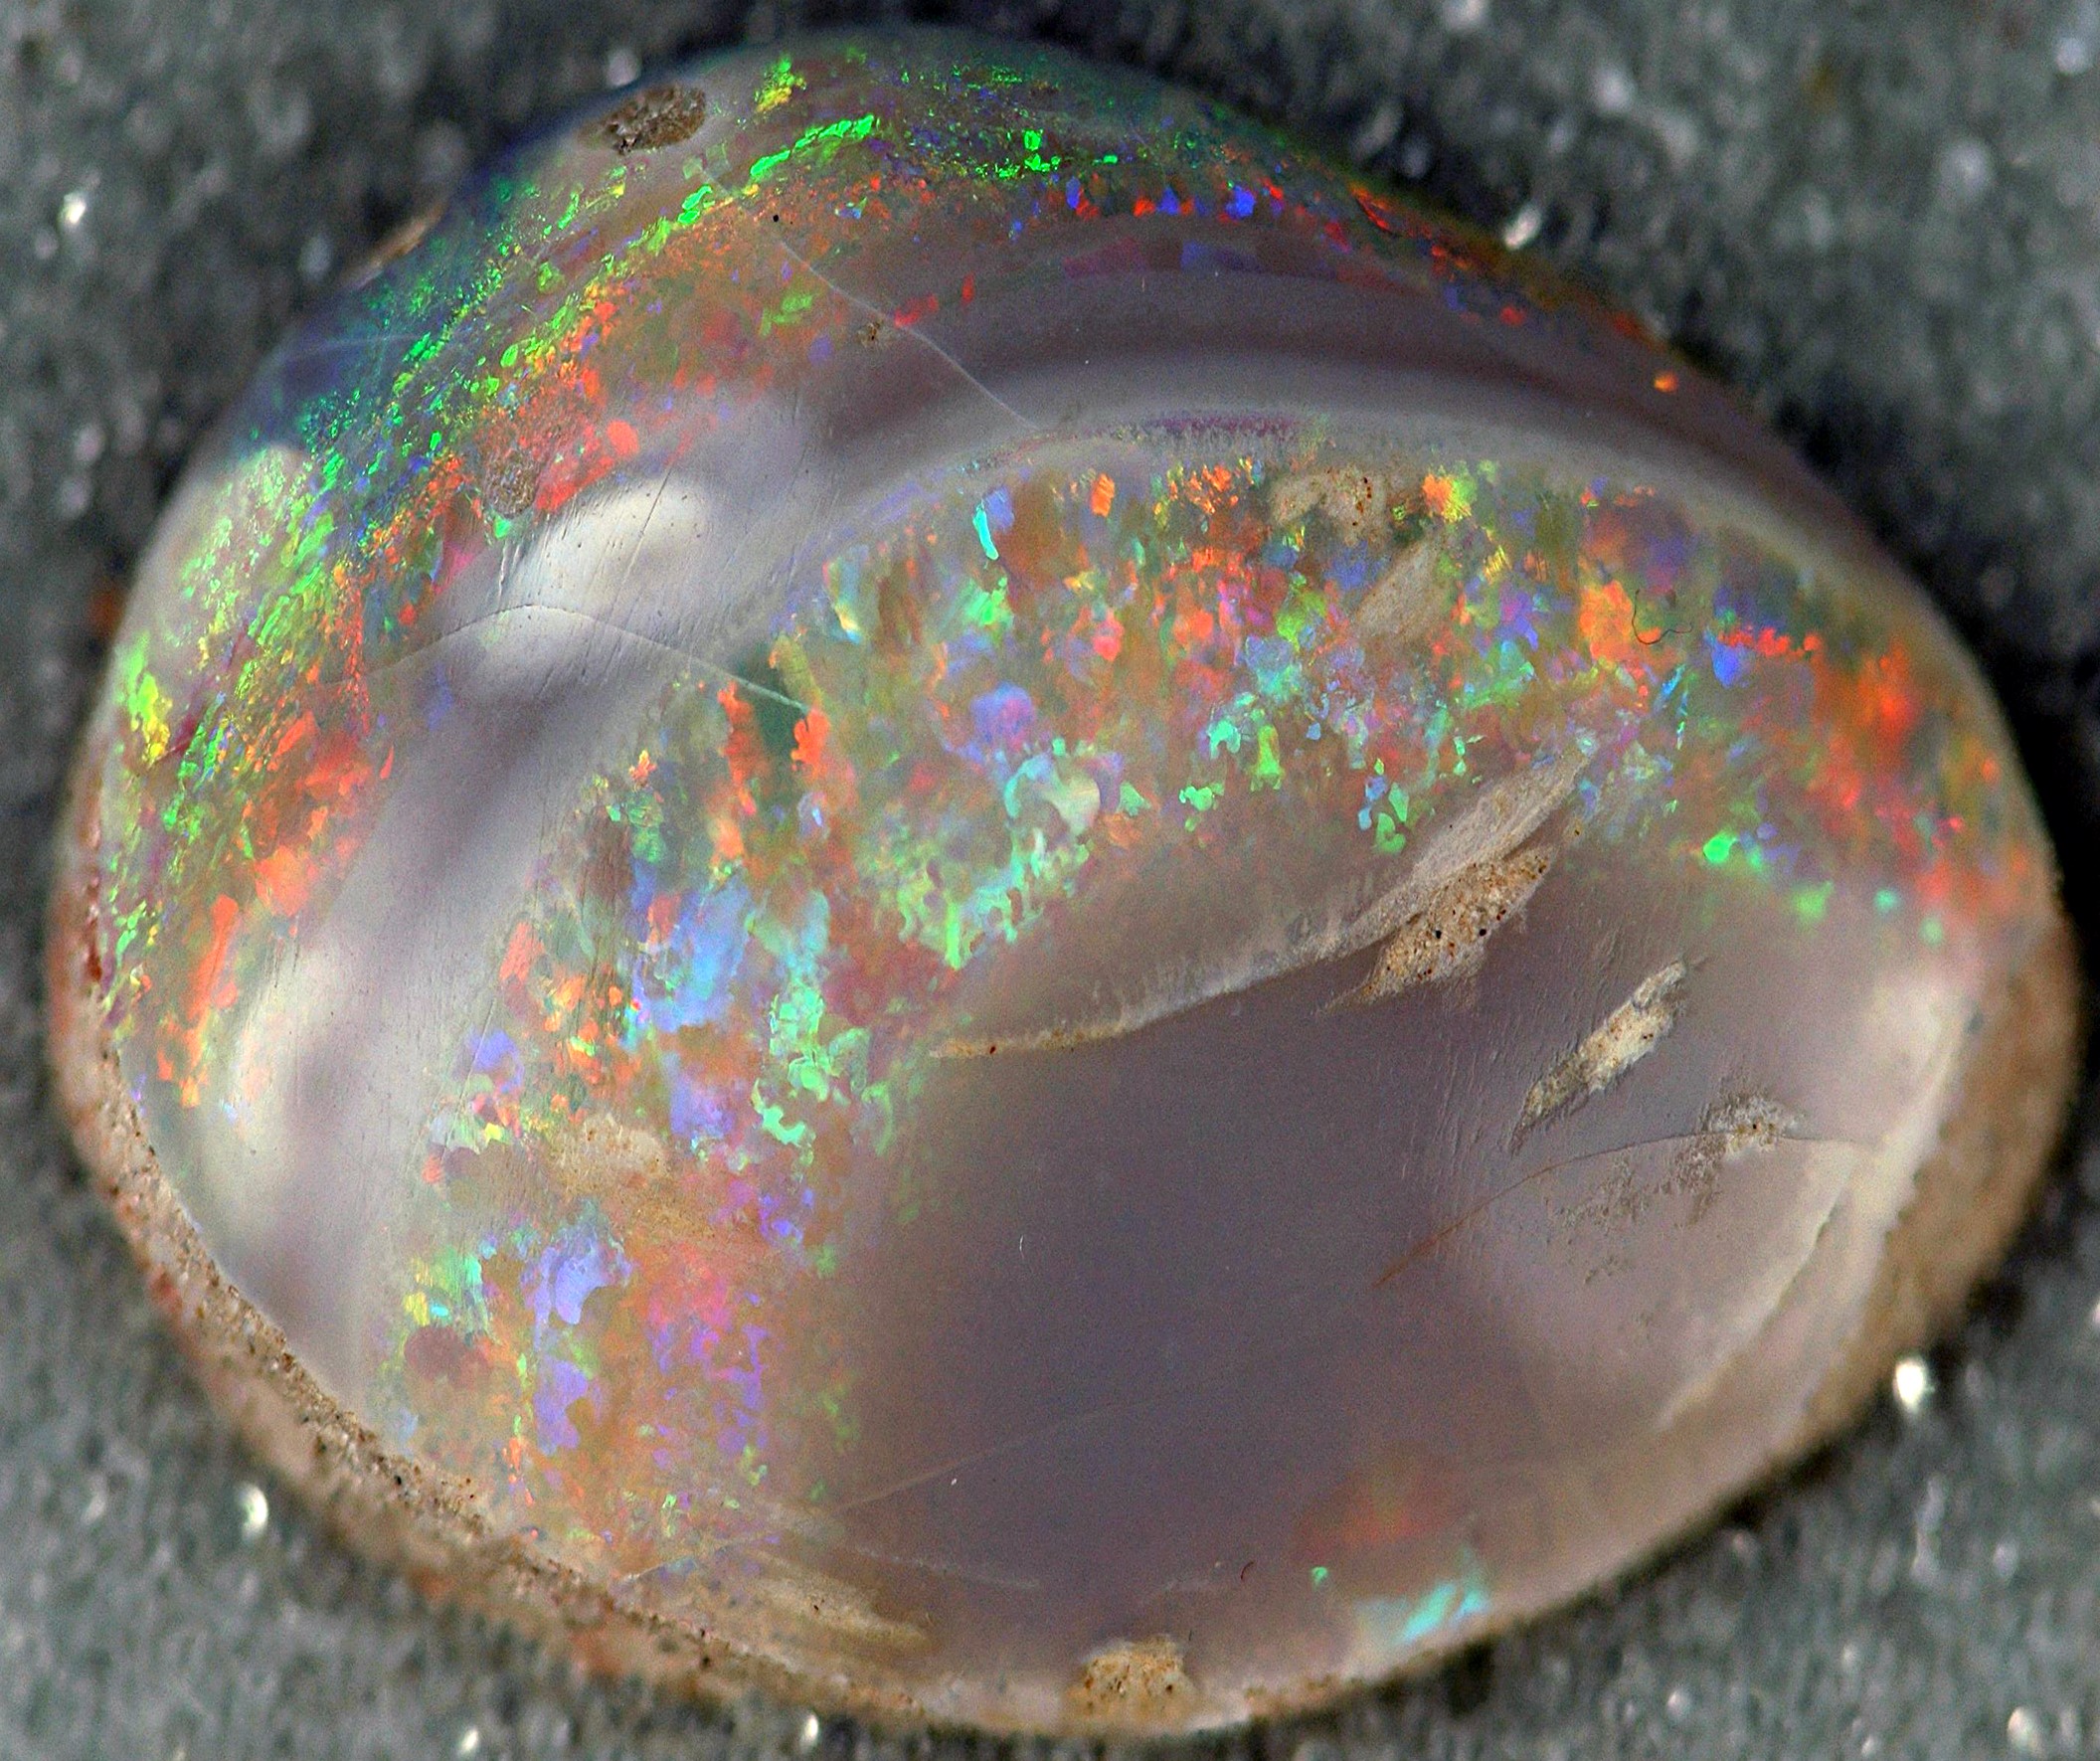 An opalized bivalve mollusc